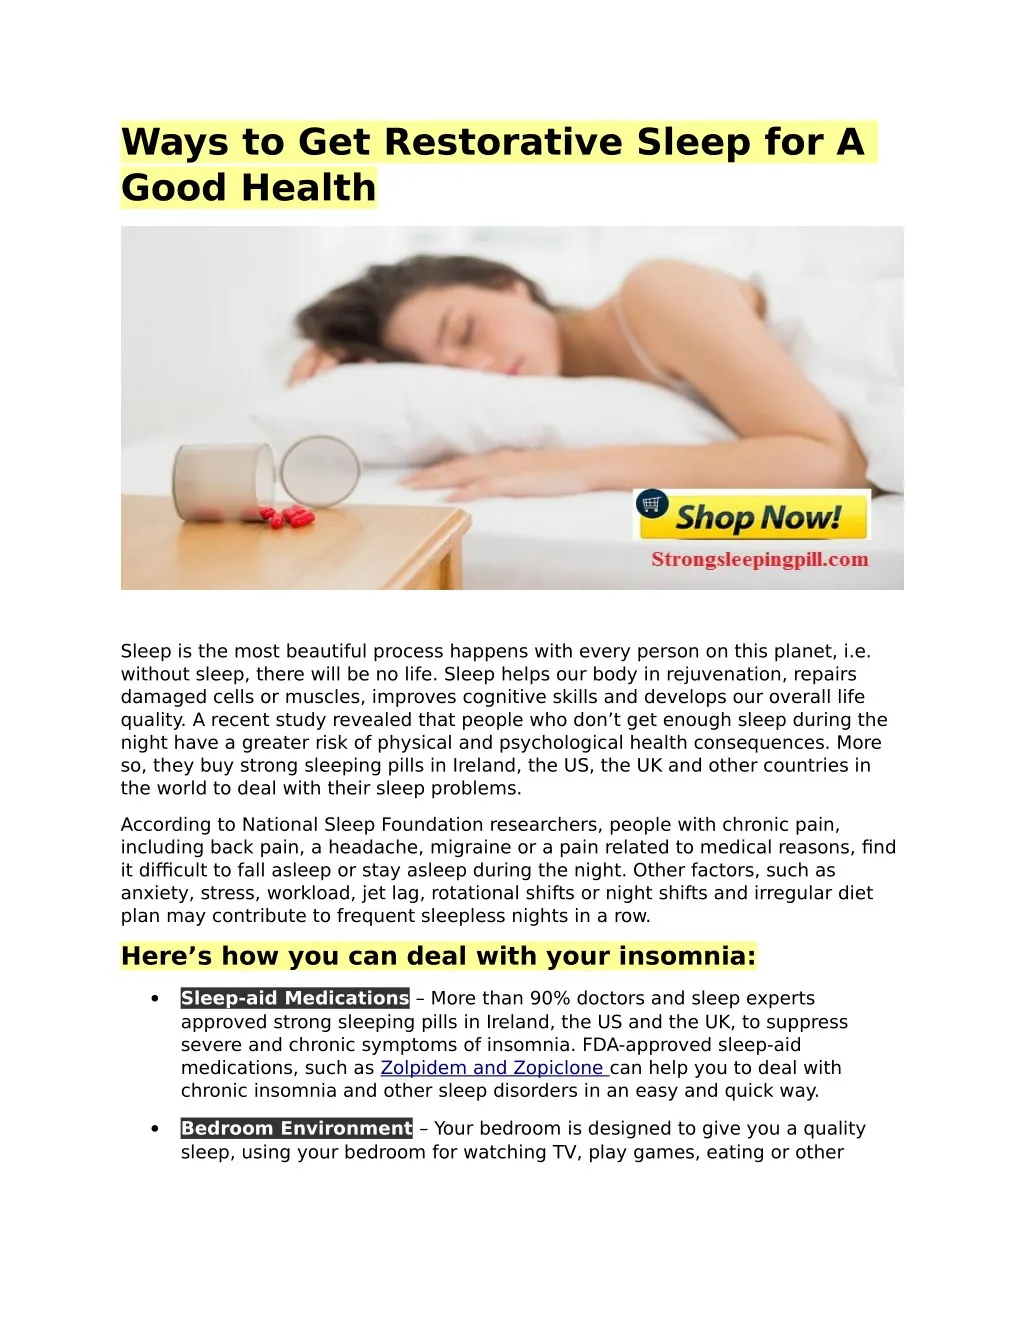 ways to get restorative sleep for a good health